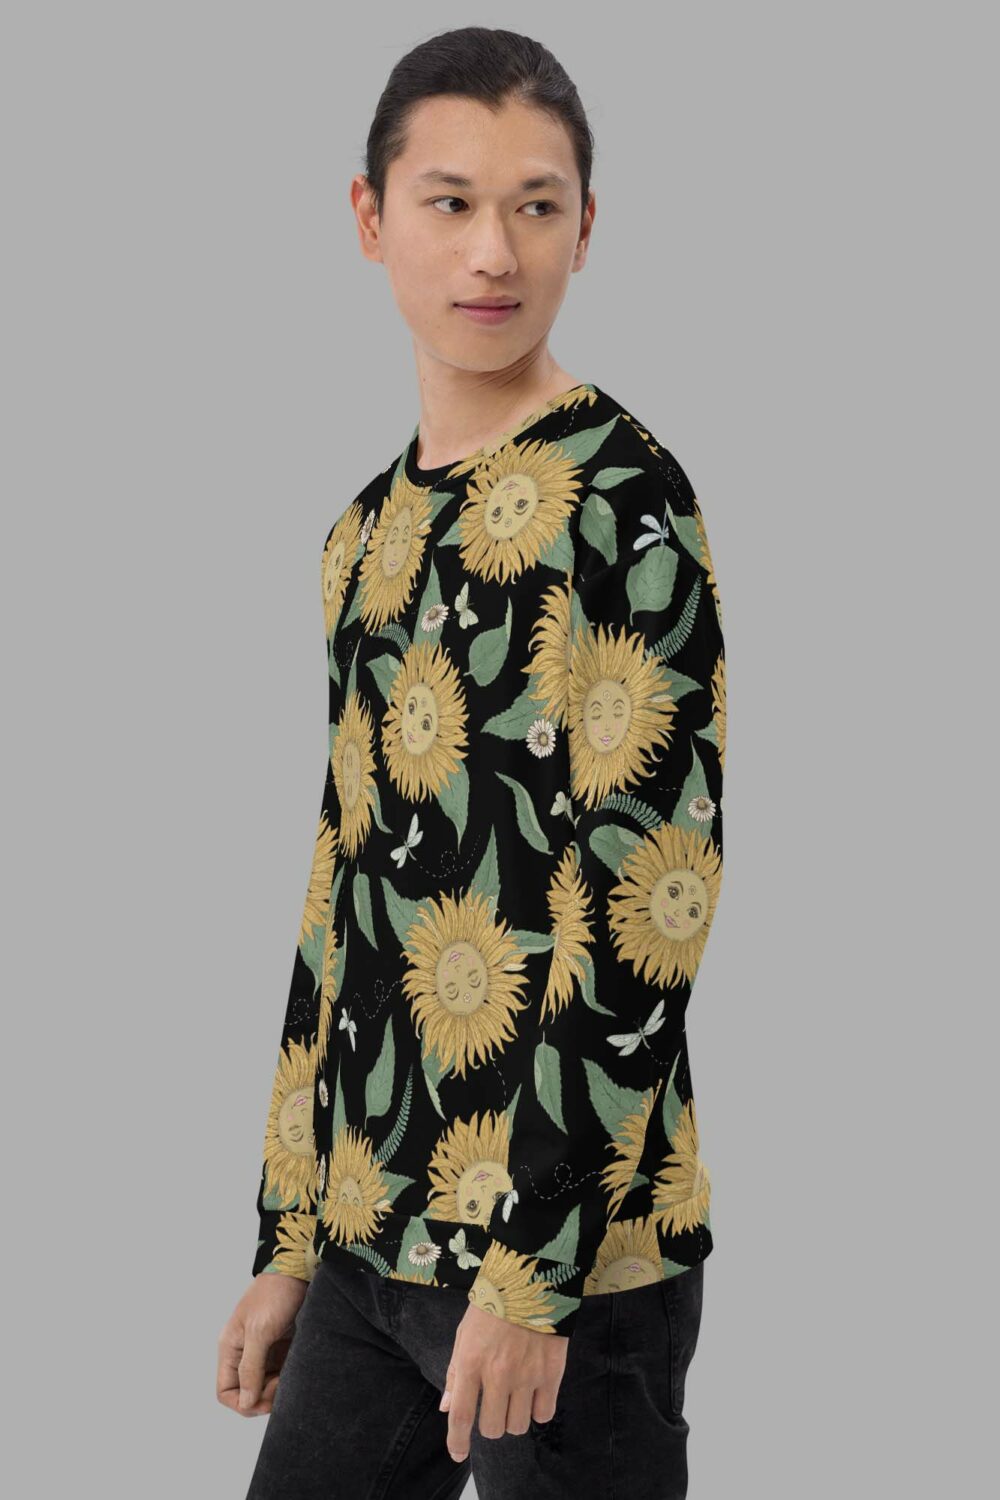 sunflower daze print sweatshirt